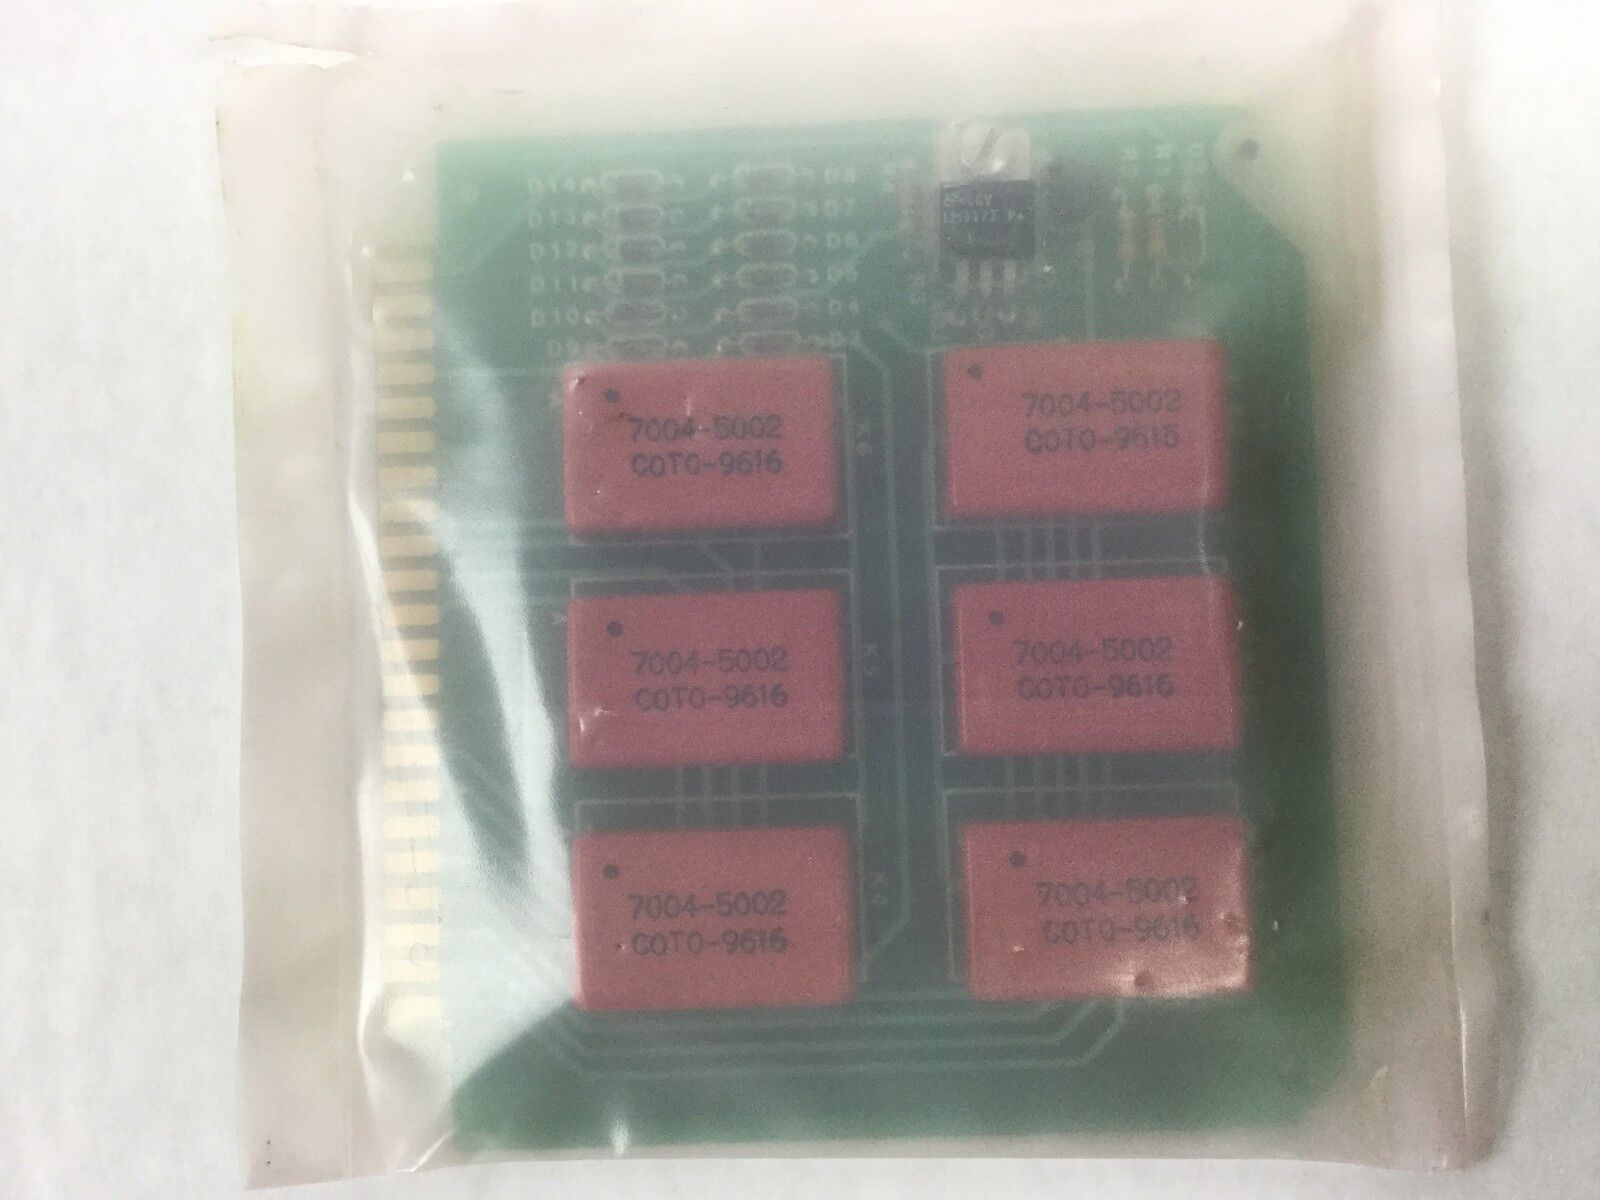 6 Channel Selector, MC000396/ MC000396 Rev E, Card, NEW in Sealed Bag